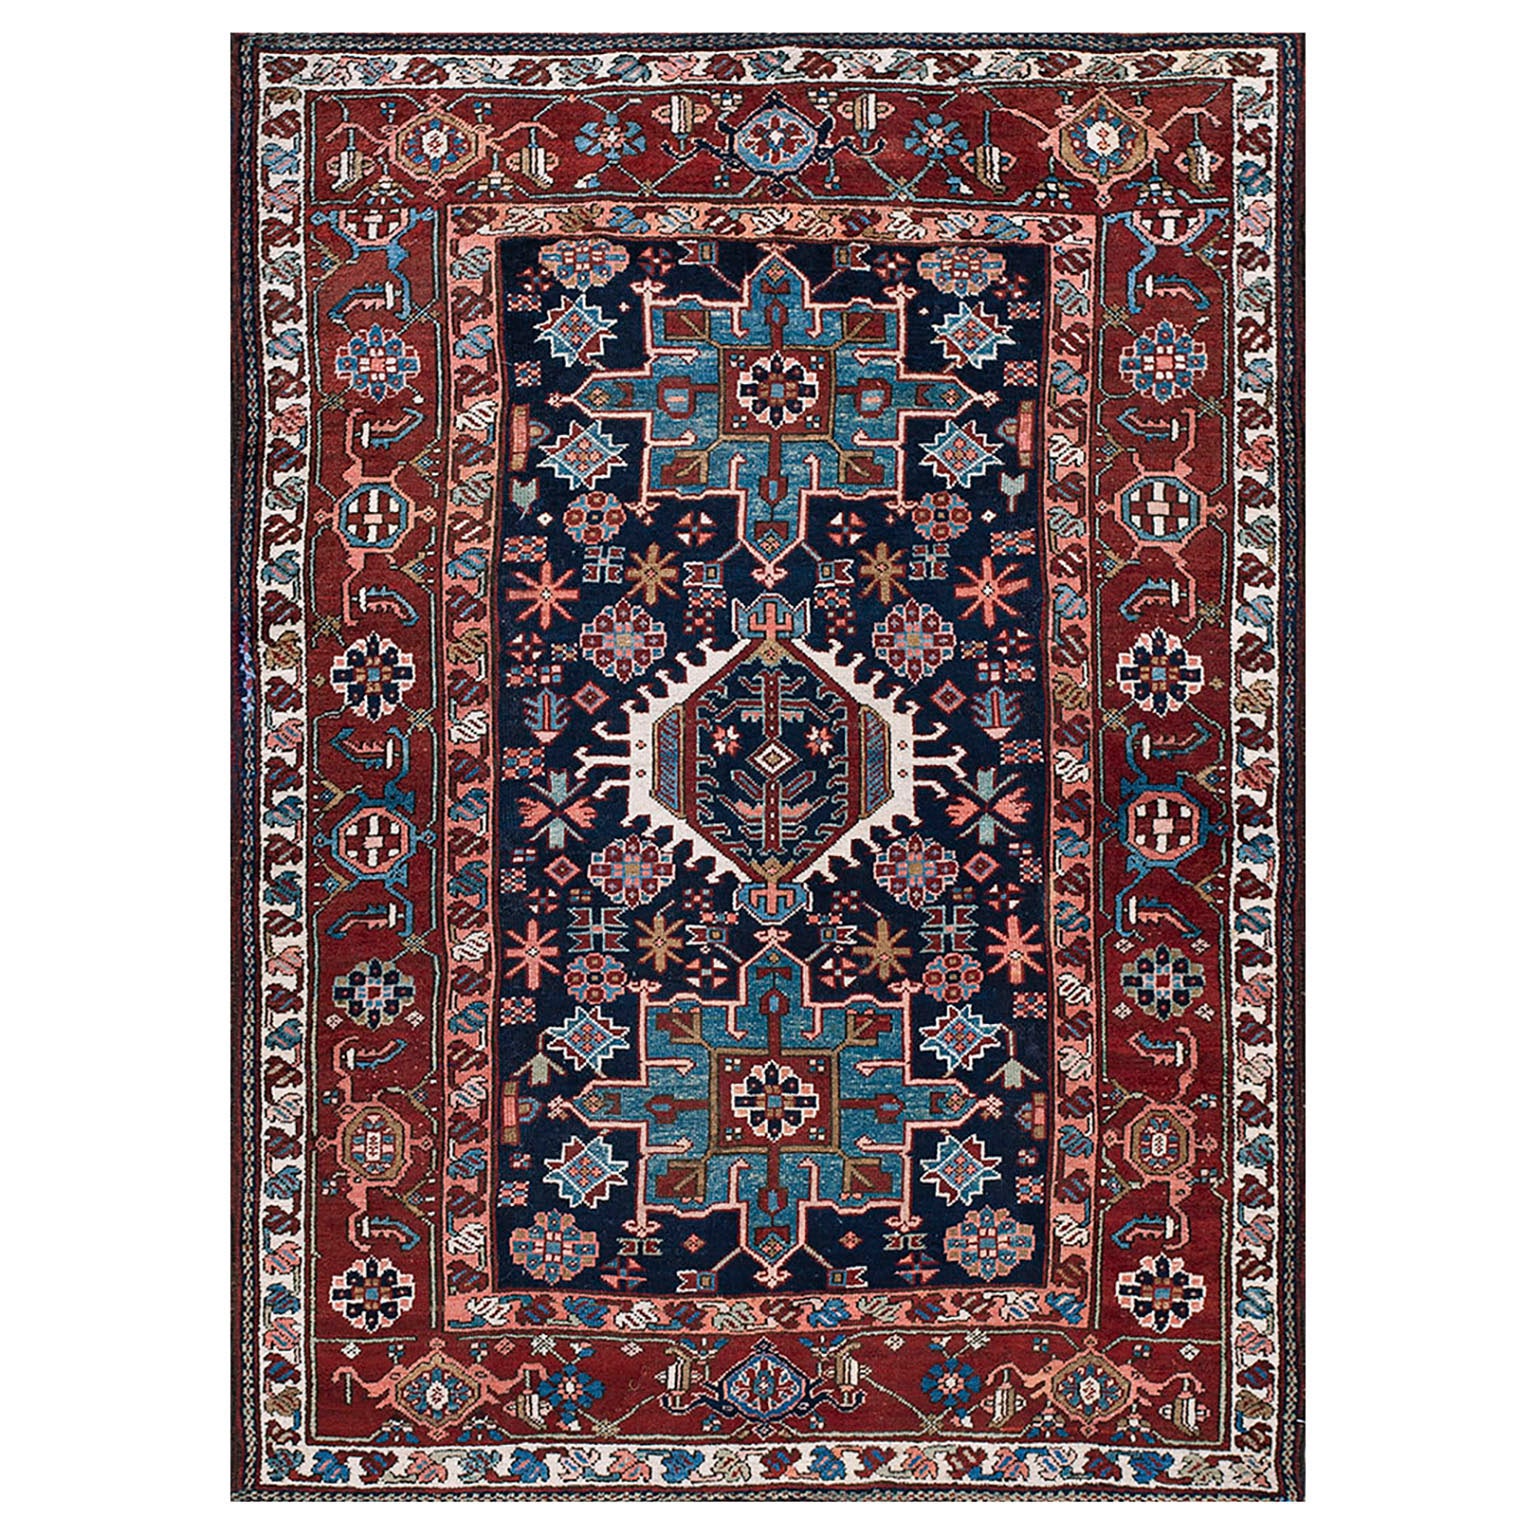 Early 20th Century N.W. Persian Karajeh Carpet ( 4'6" x 6'8" - 137 x 203 ) For Sale